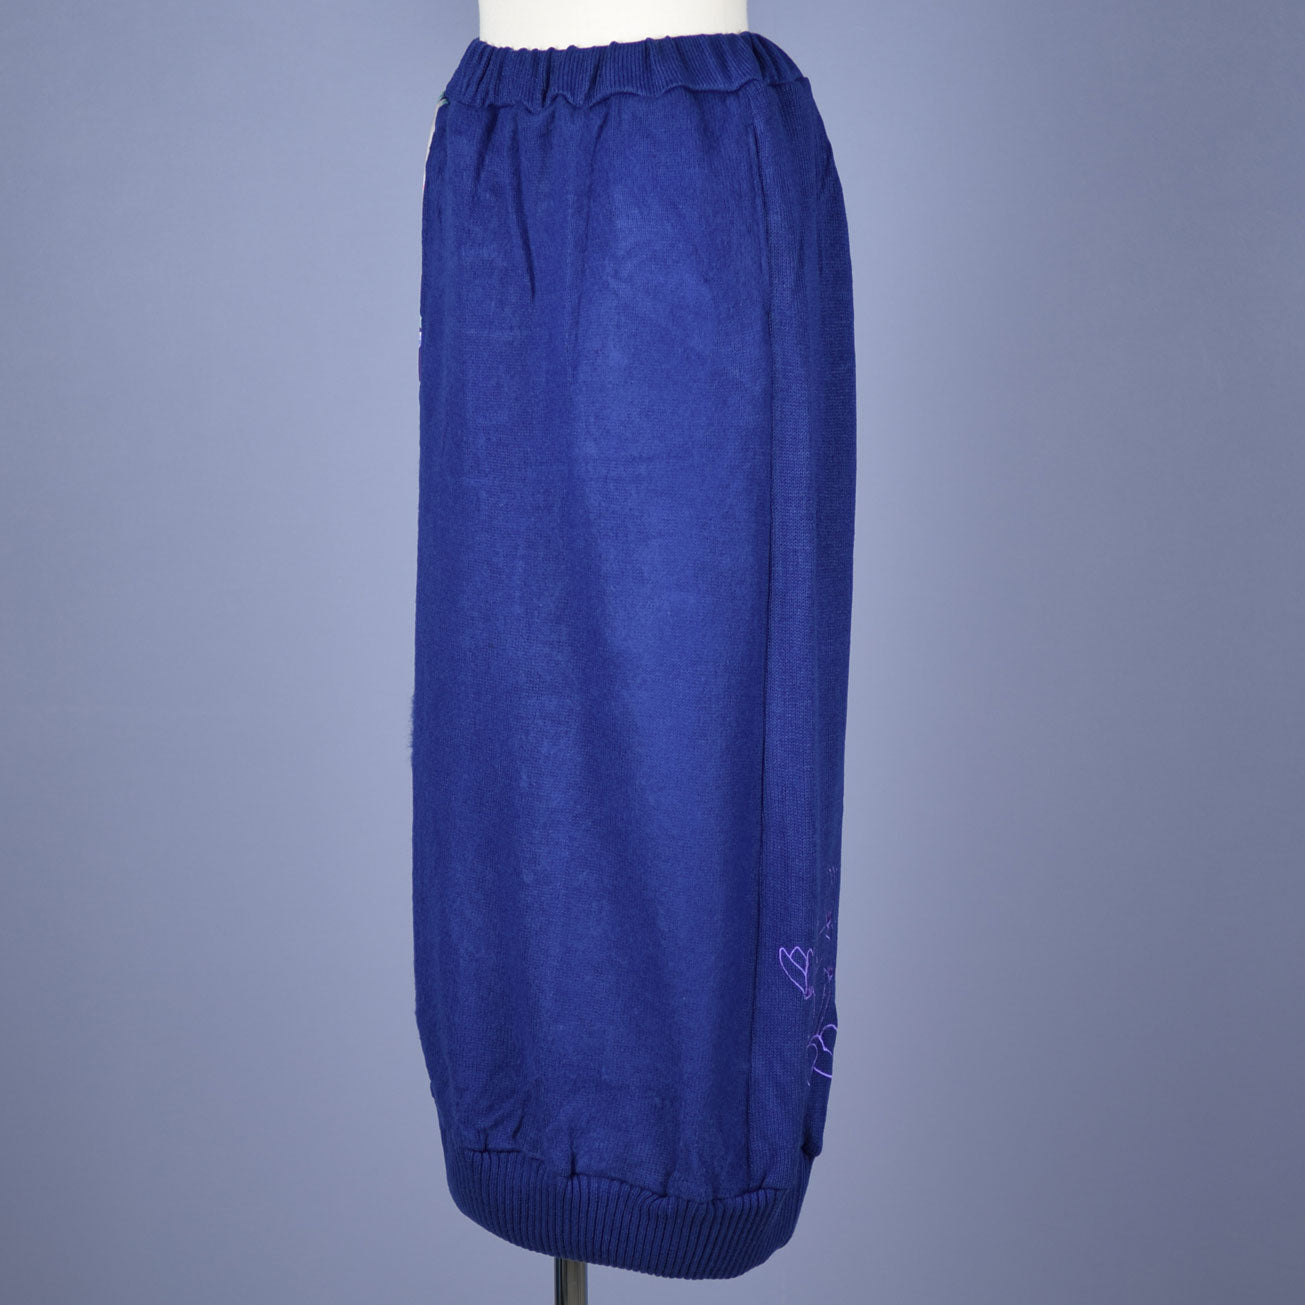 GOUK Japanese pattern switching knit skirt